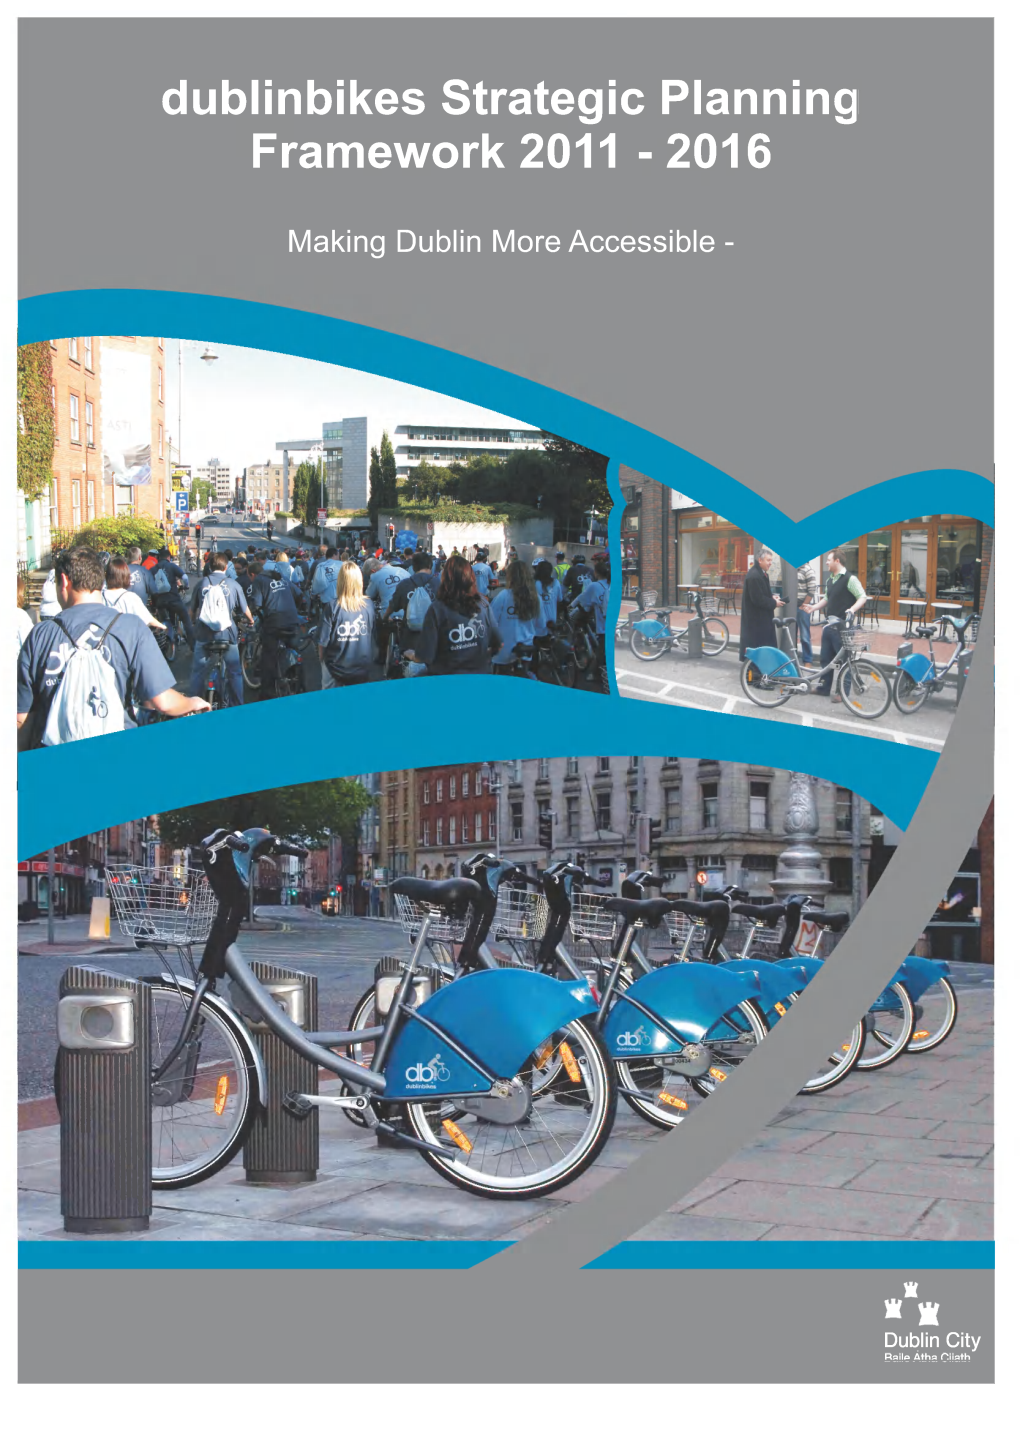 Dublinbikes Strategic Planning Framework 2011 - 2016